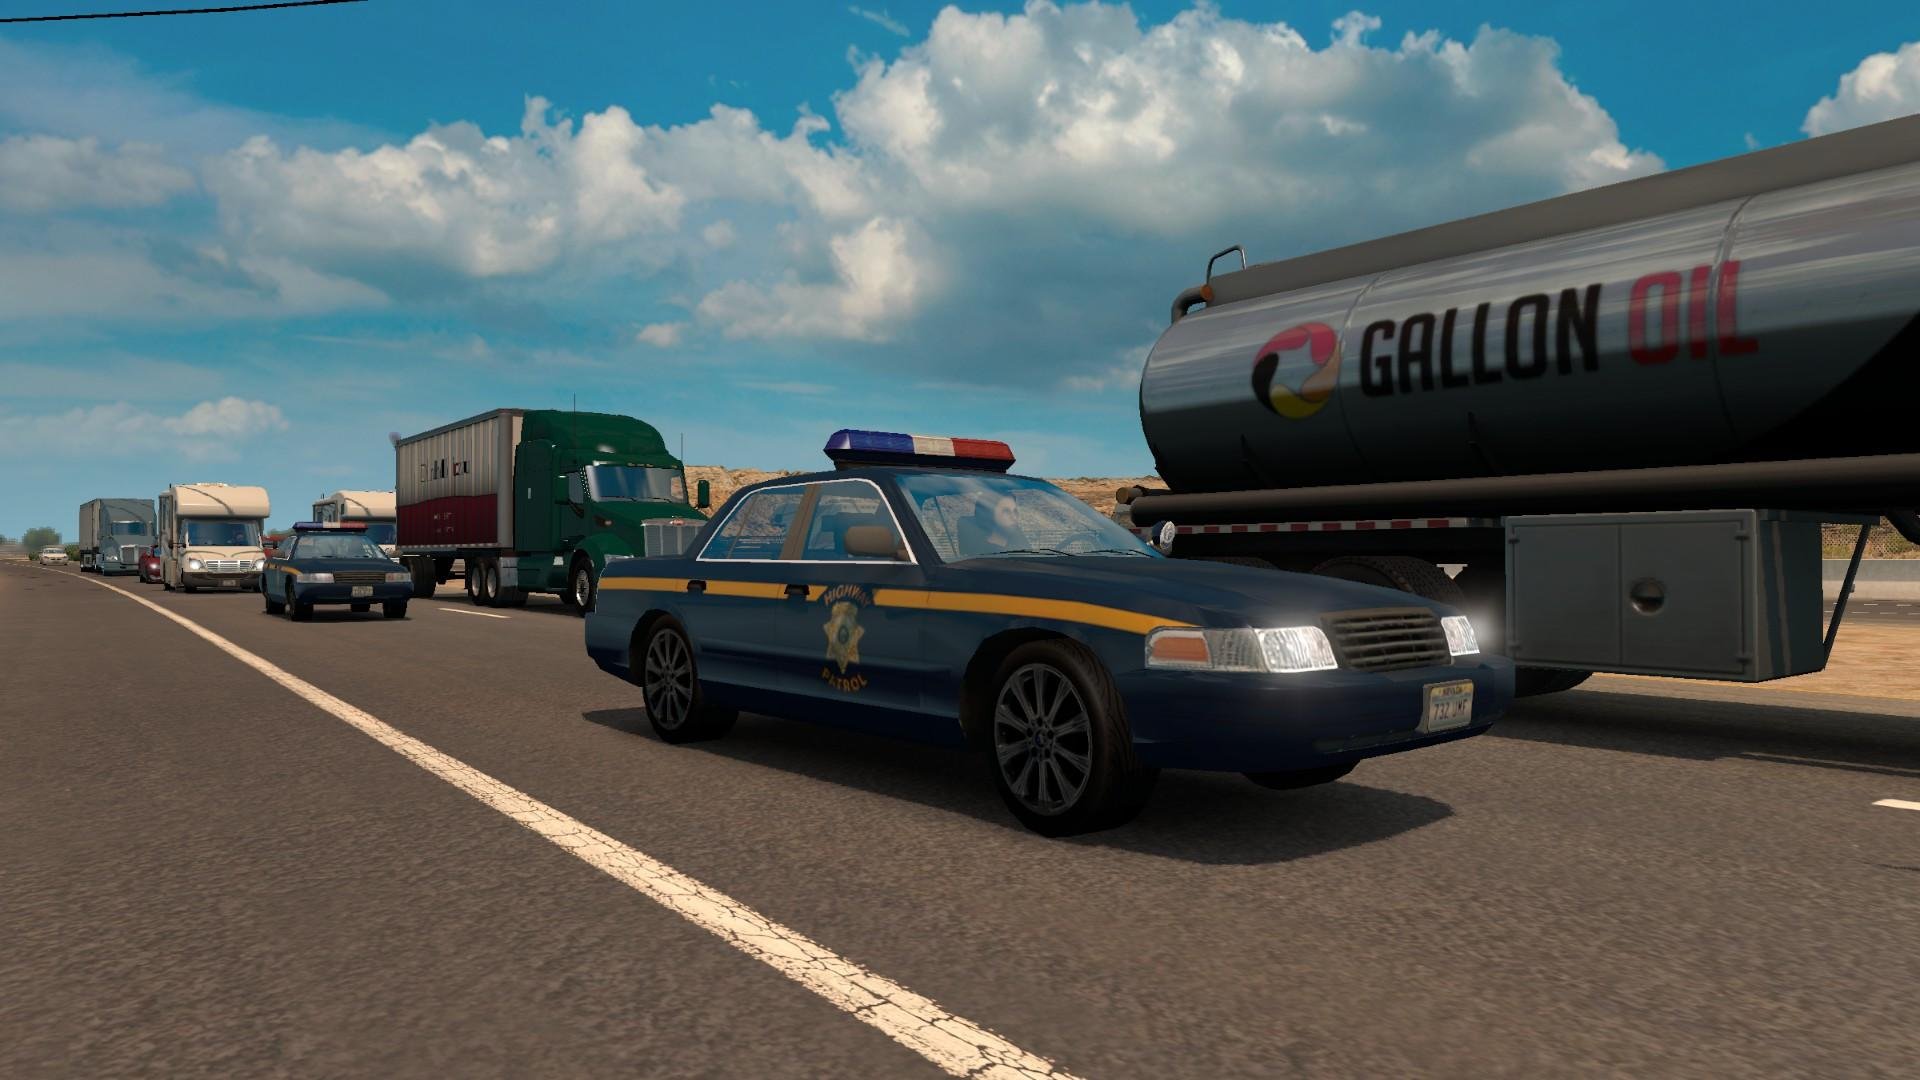 Separate California and Nevada Highway Patrol cars